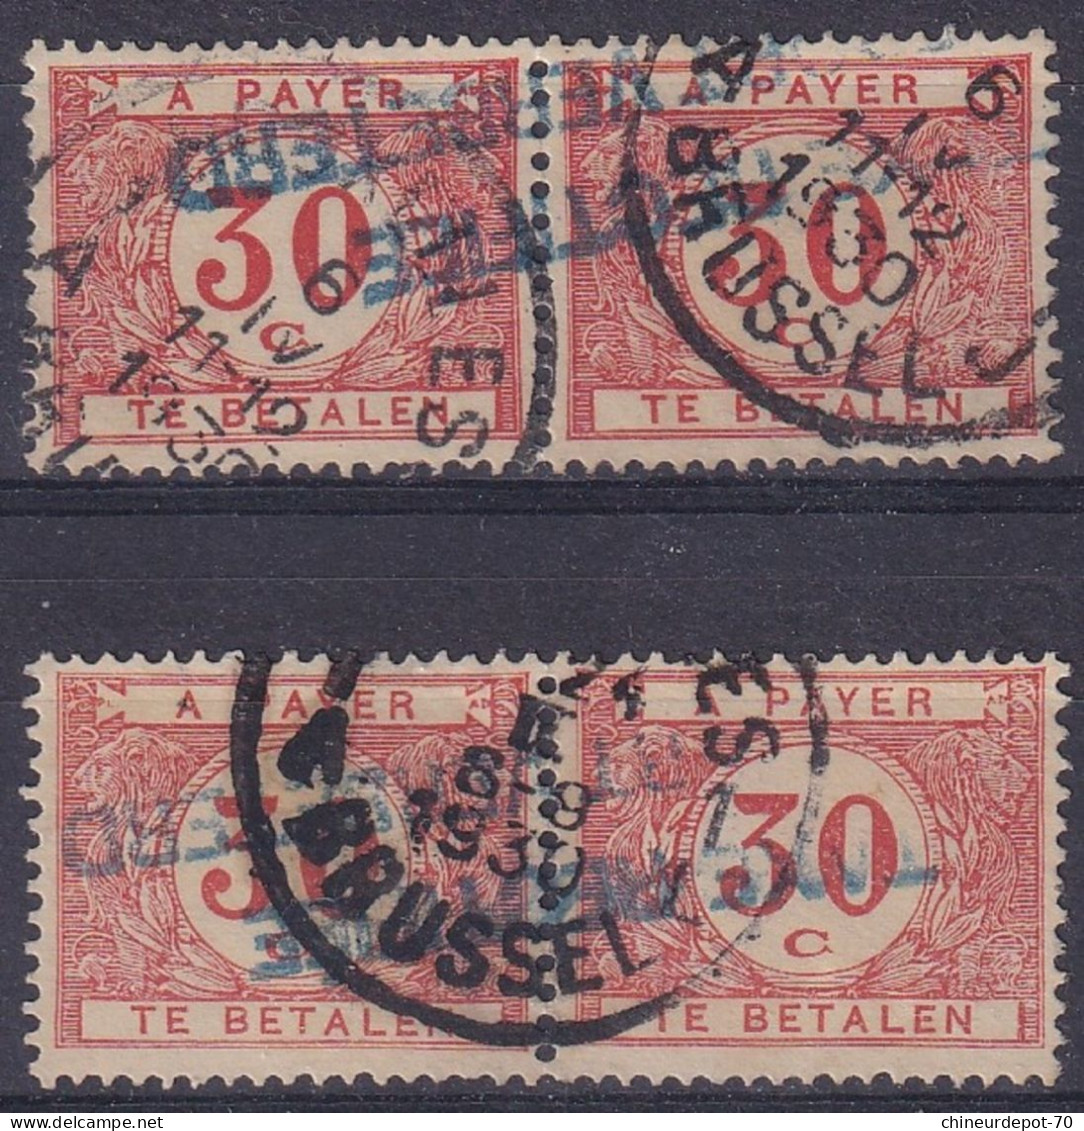 TIMBRES T Taxes EN PAIRE BRUSSEL 1930 TAXE RECTIFIÉ - Stamps